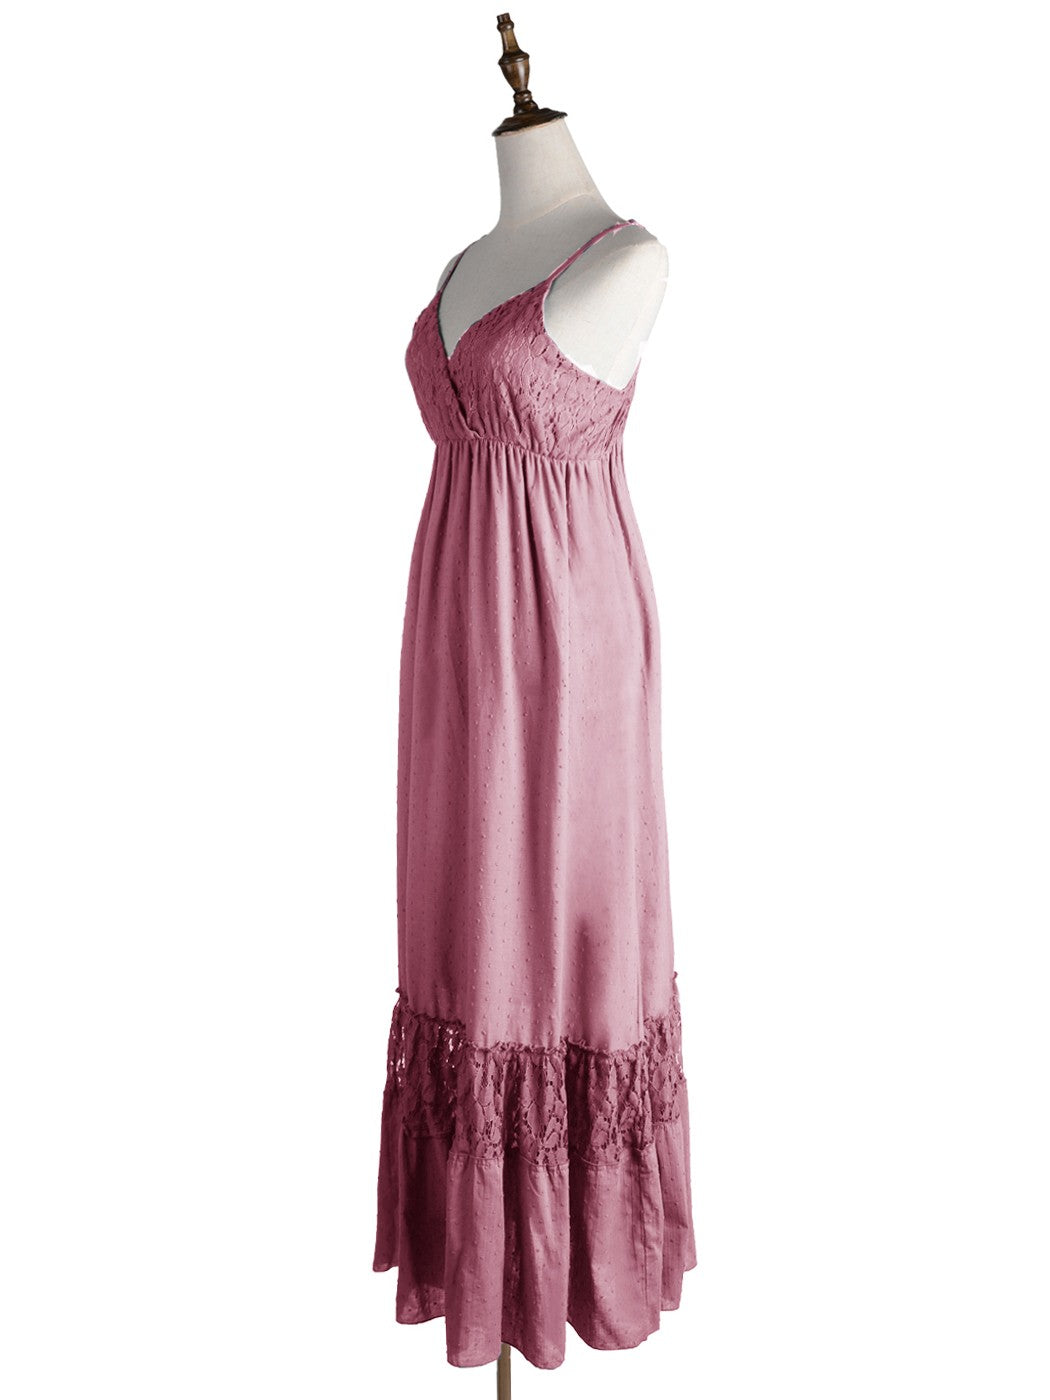 Sweetheart Neckline Clip Dot Lace Maxi Dress